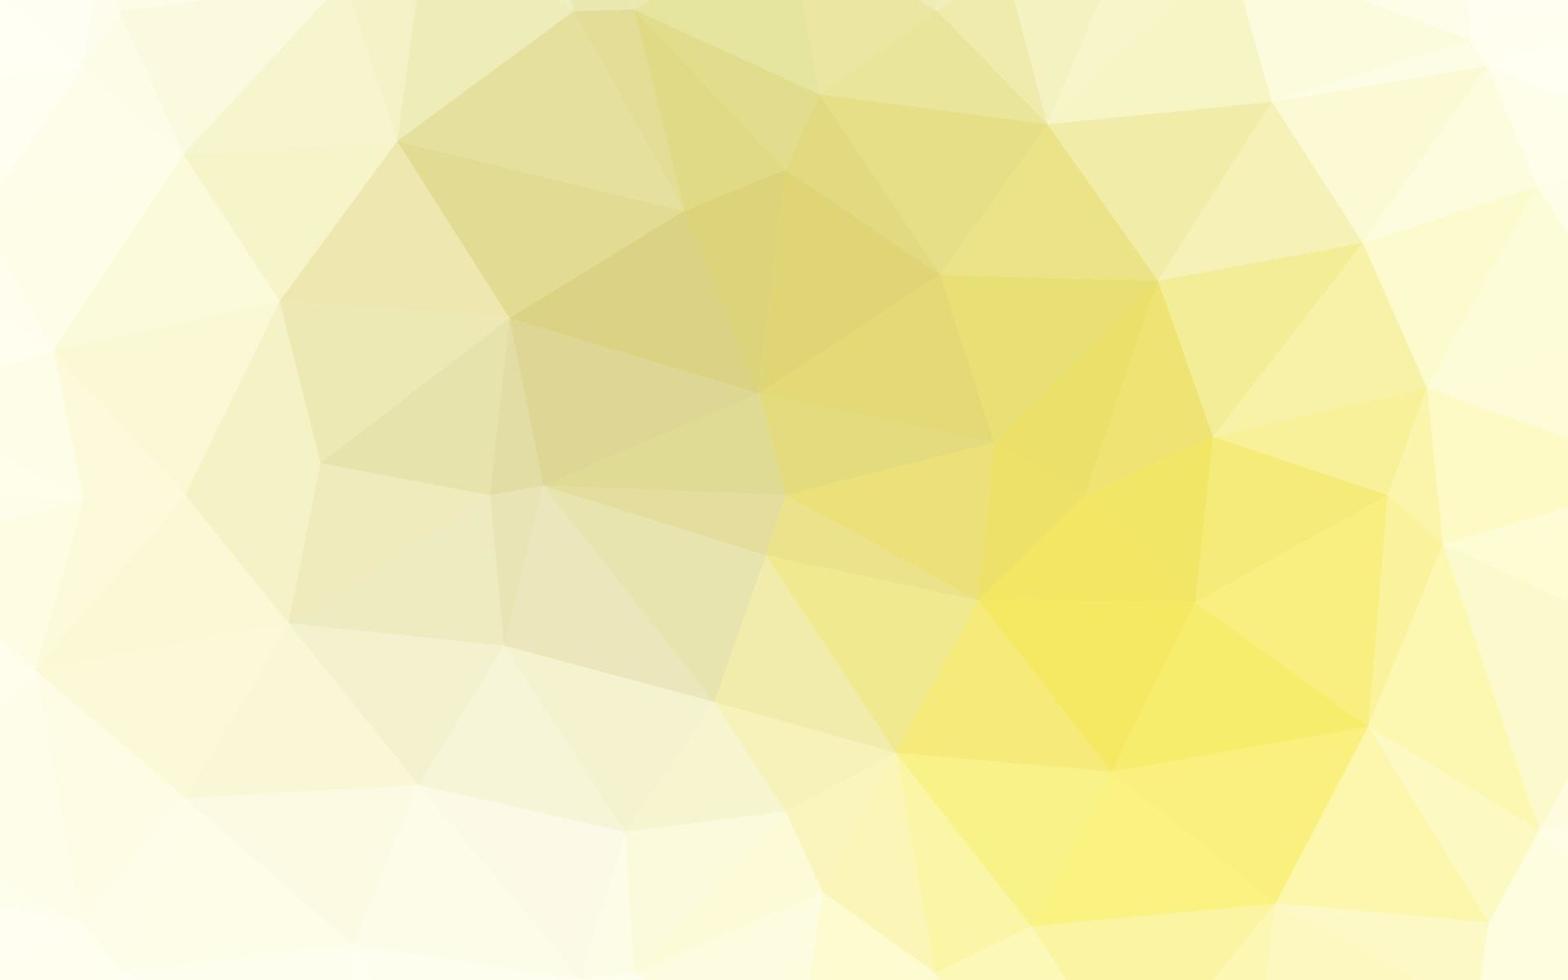 cubierta poligonal abstracta de vector amarillo claro, naranja.